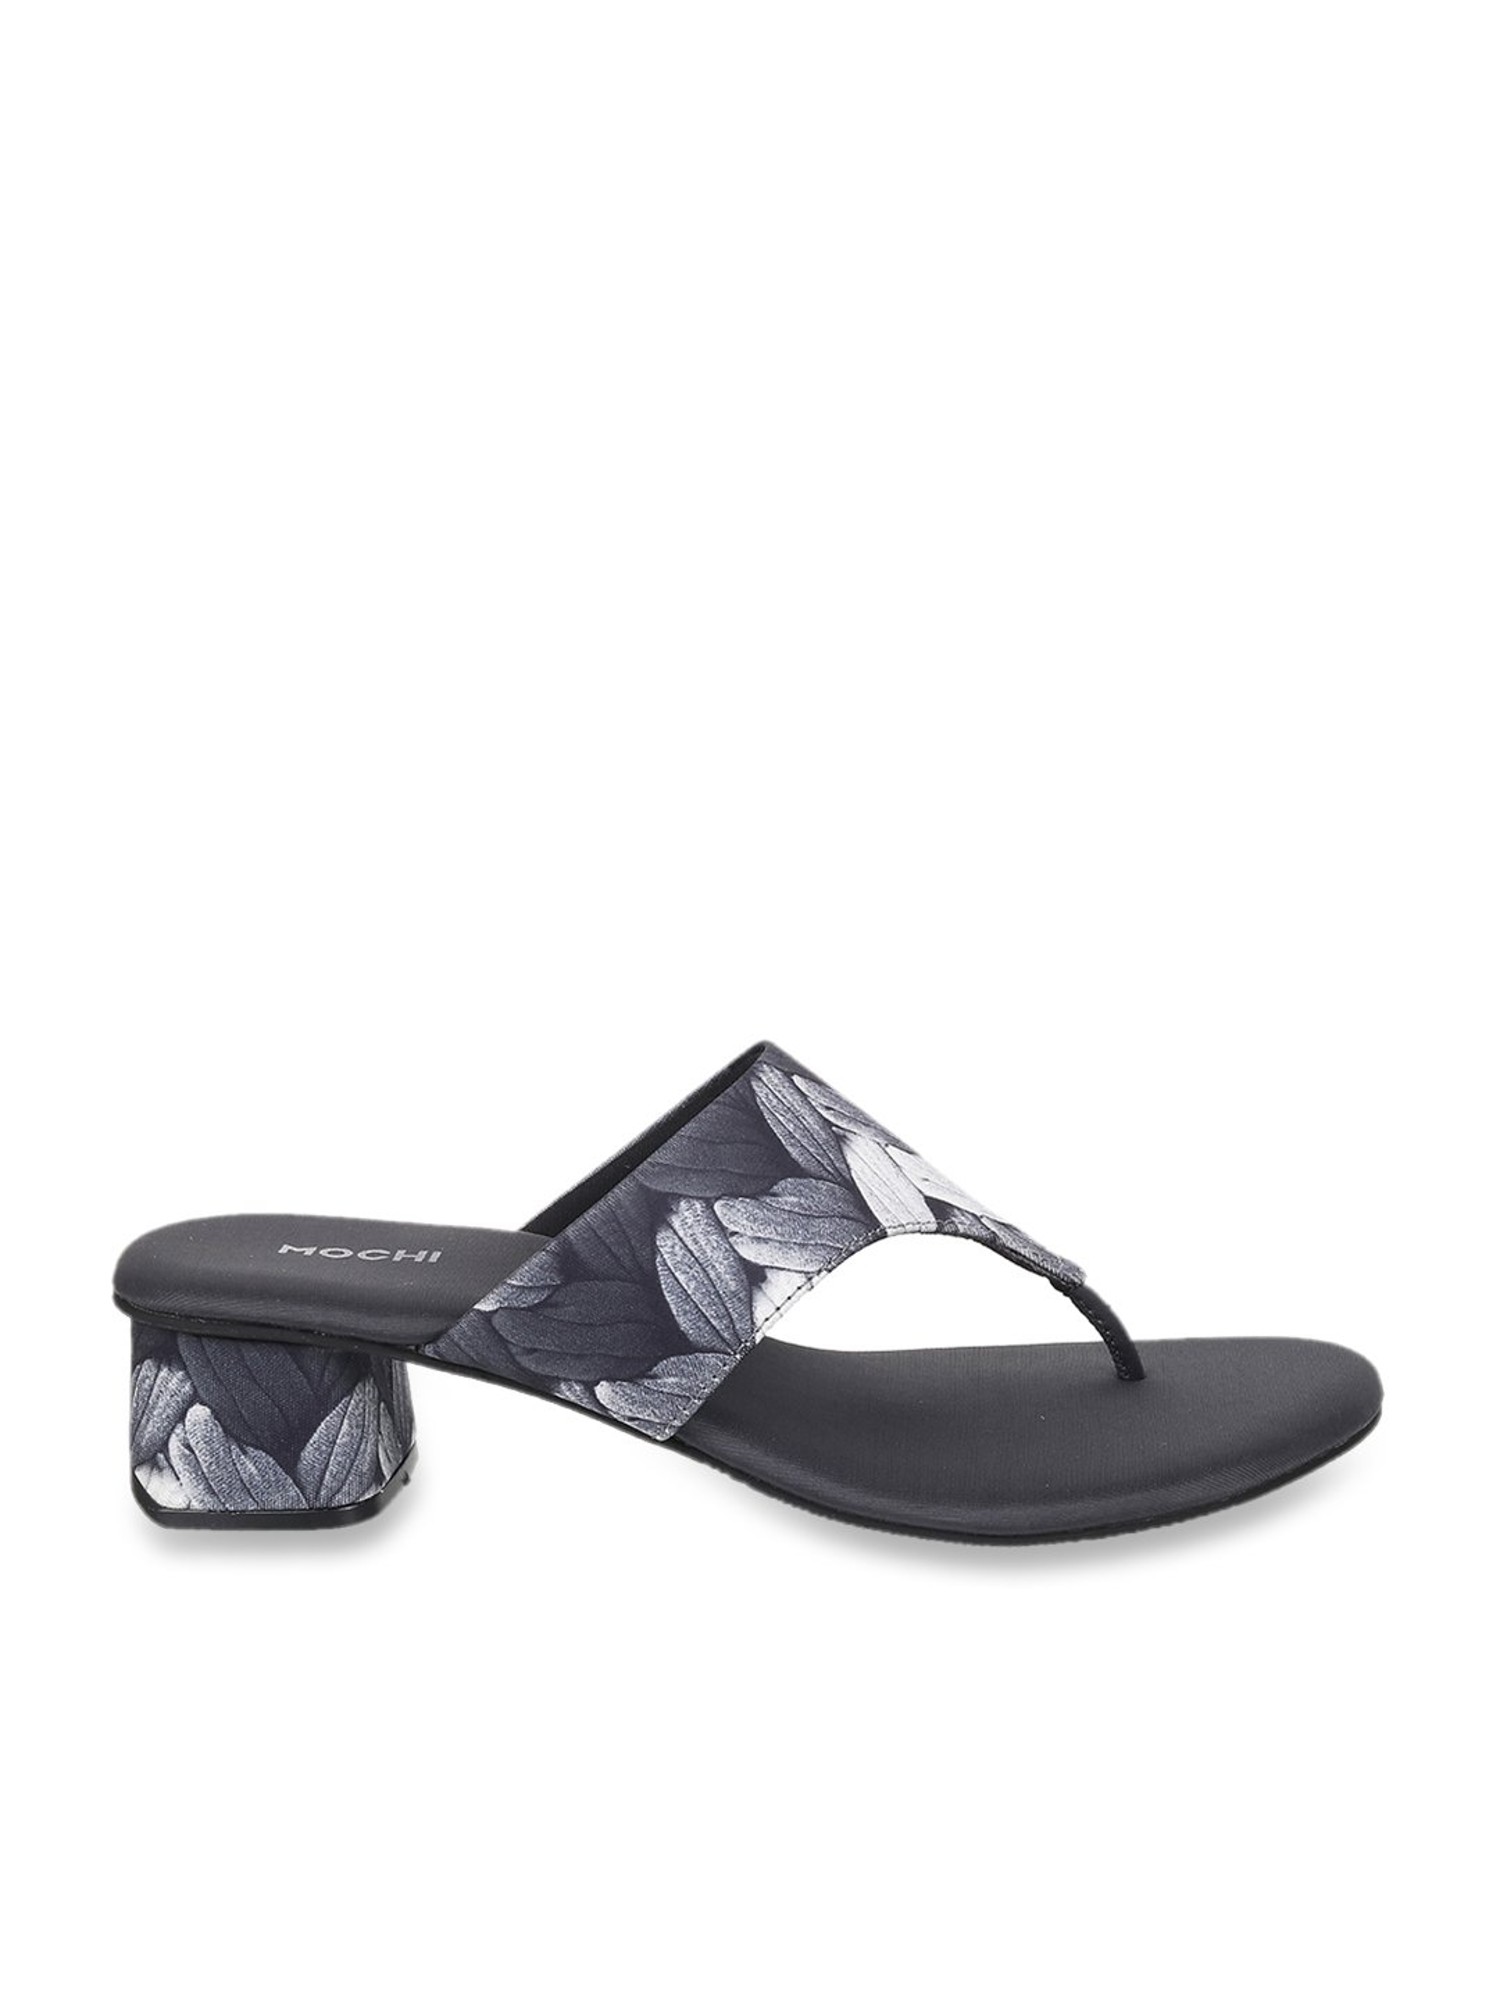 Girls Sandals - Buy Sandals for Girls Online | Mochi Shoes-sgquangbinhtourist.com.vn